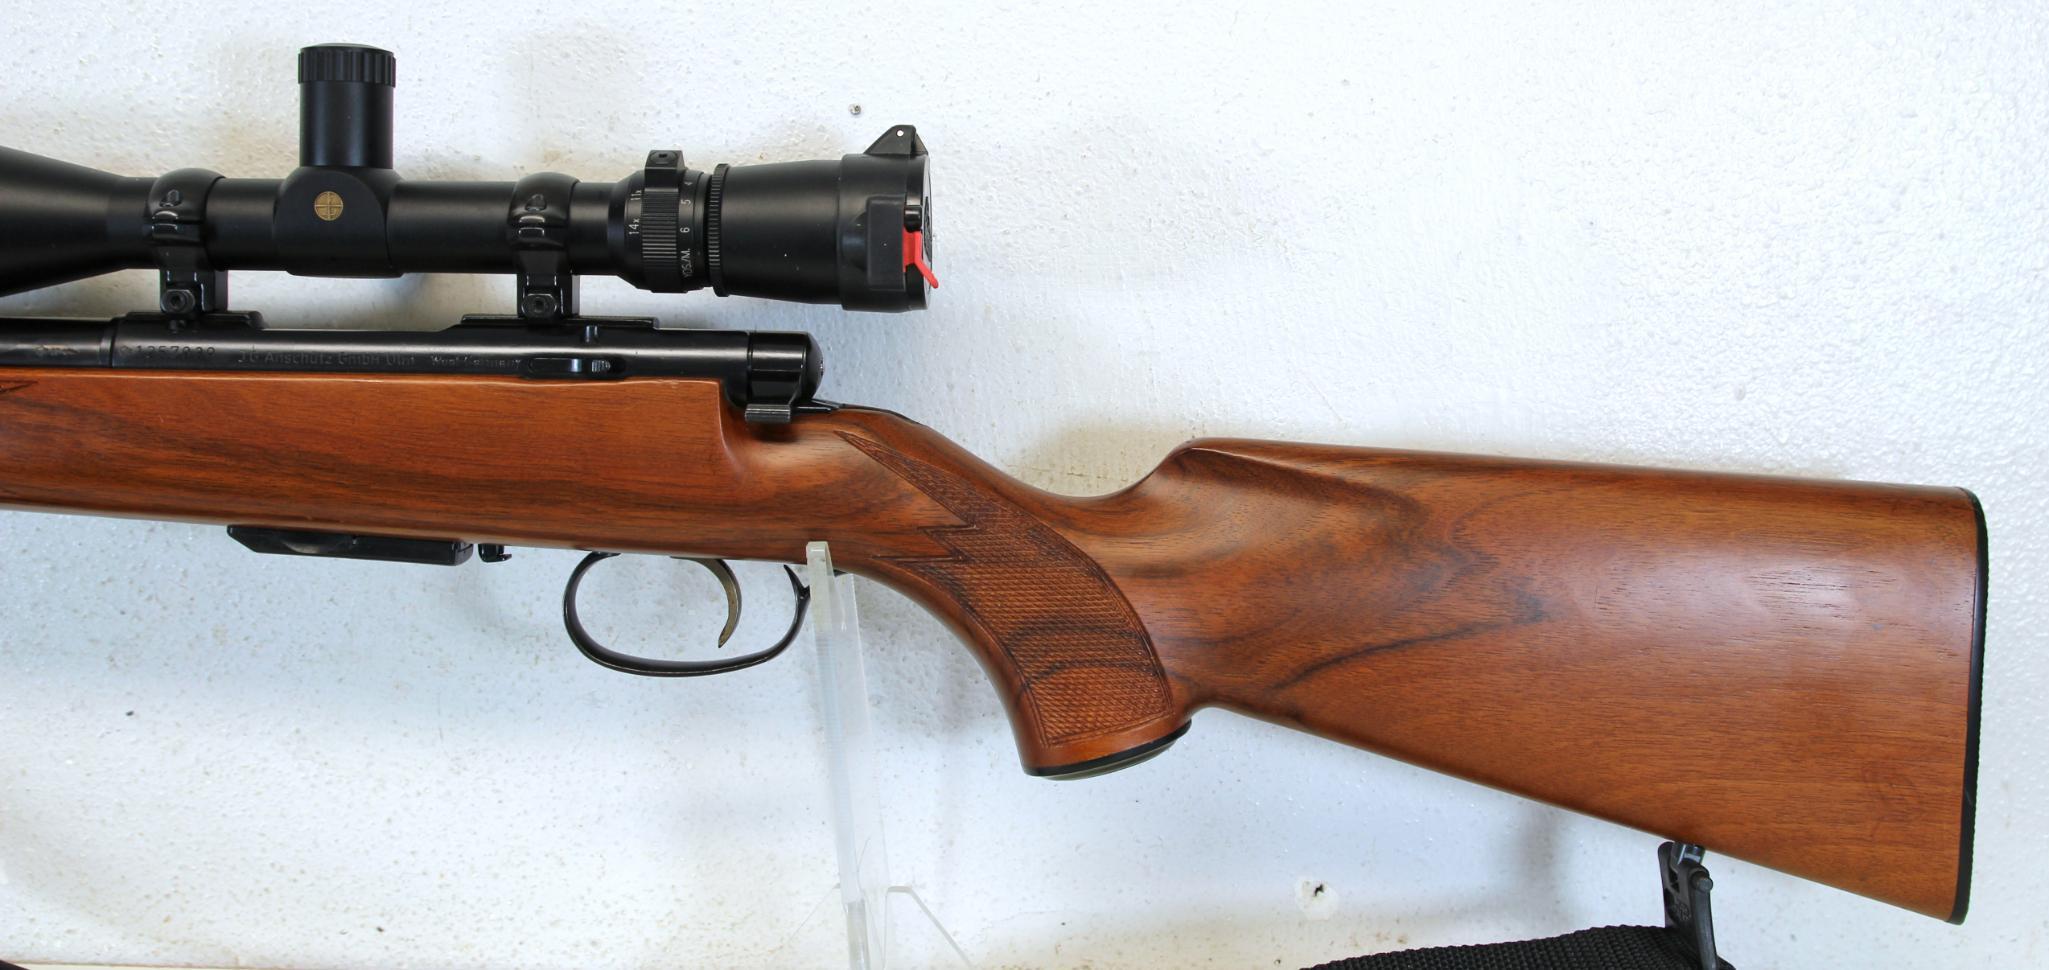 J.G. Anschutz Model 1532 .222 Rem. Clip Fed Bolt Action Rifle with Leupold Scope 24" Heavy Target